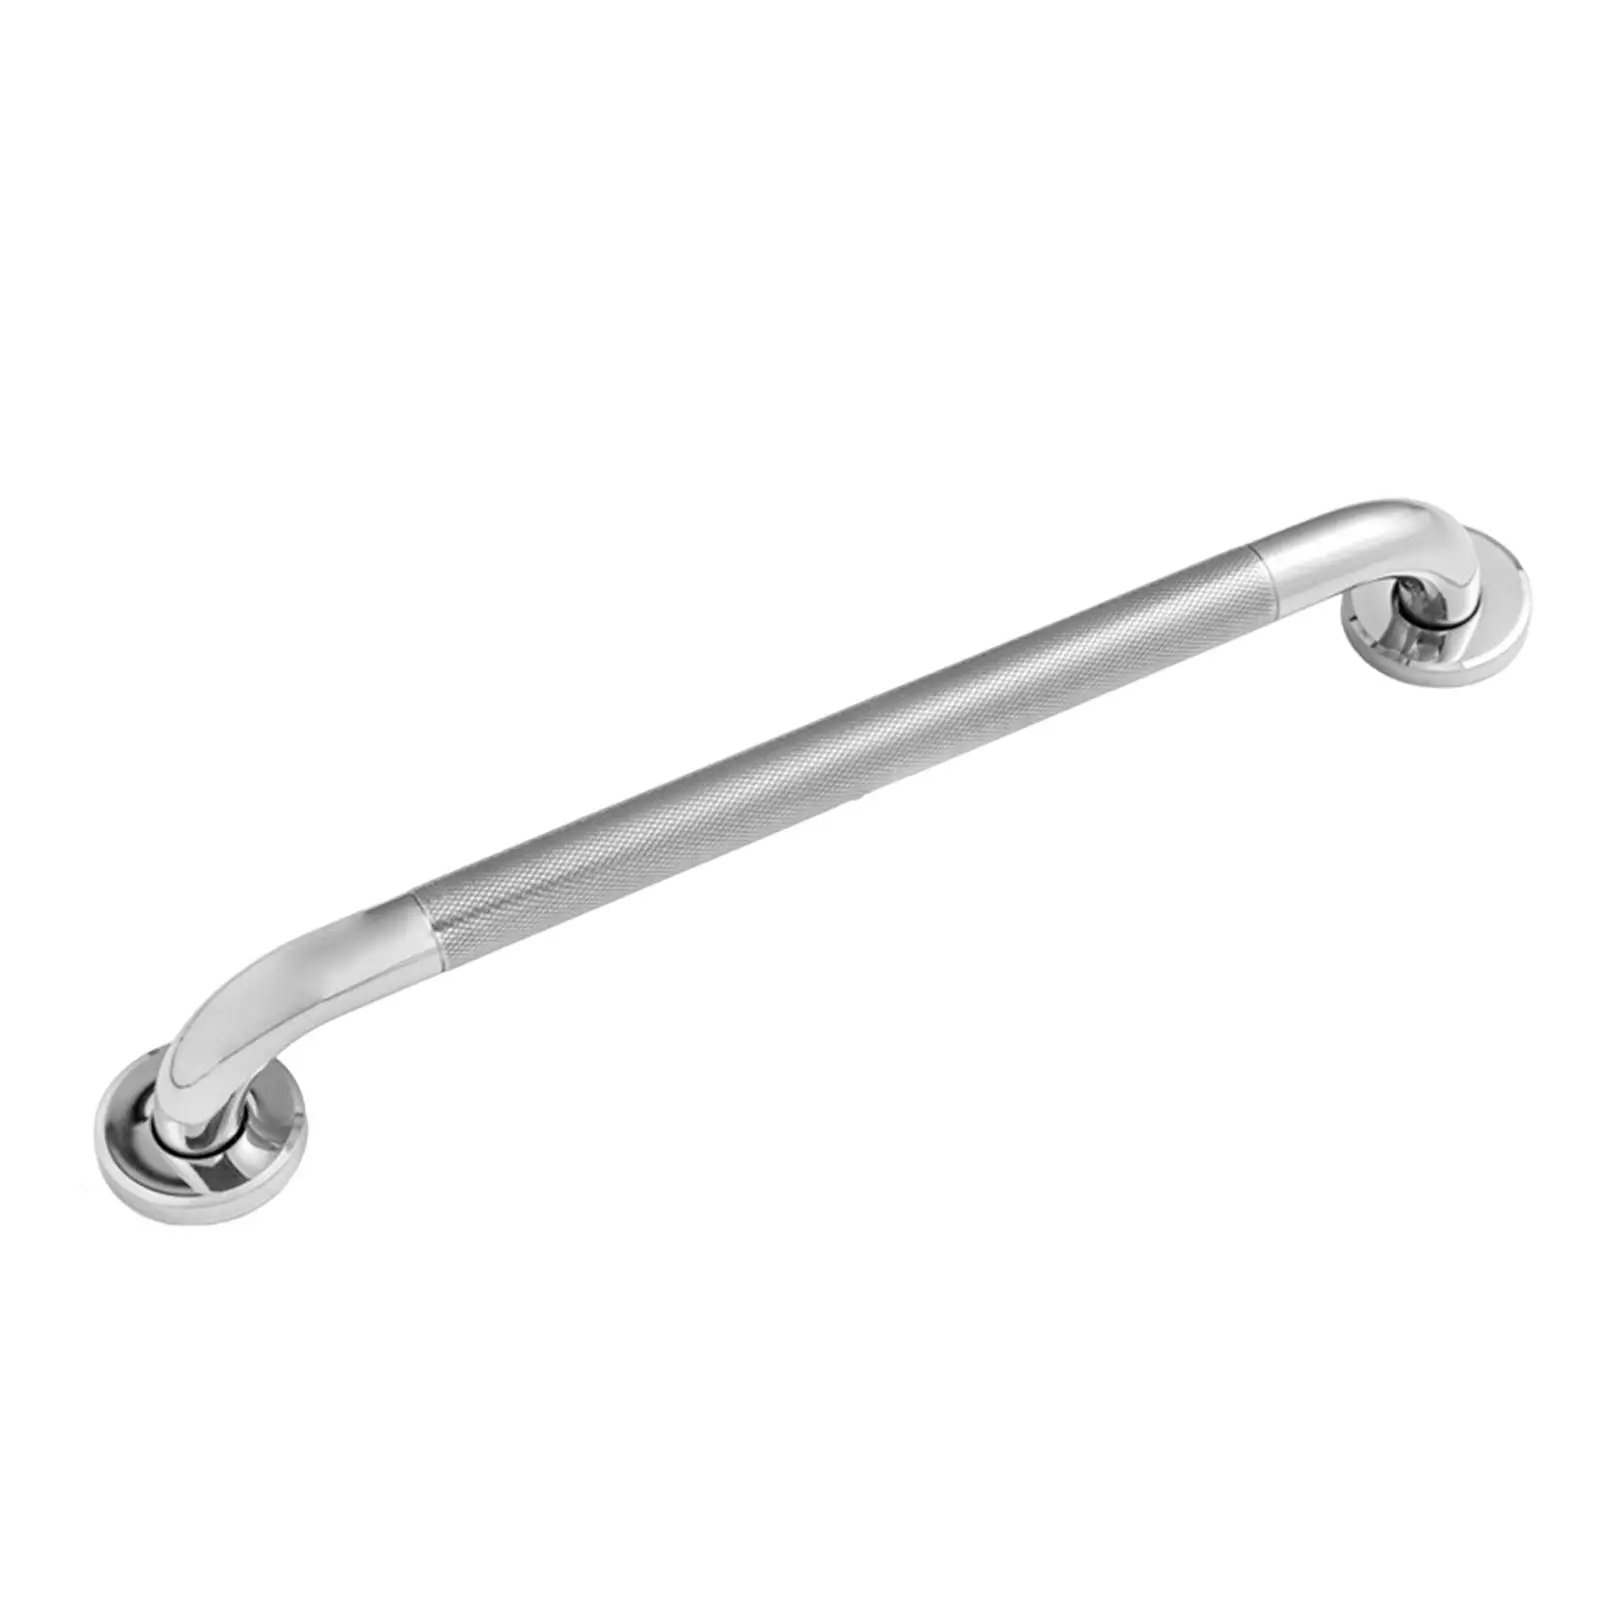 Anti Slip Shower Grab Bar Handle Easy to Install Anti Rust Stainless Steel Waterproof Durable 23.6inch Bathroom Handrail Senior